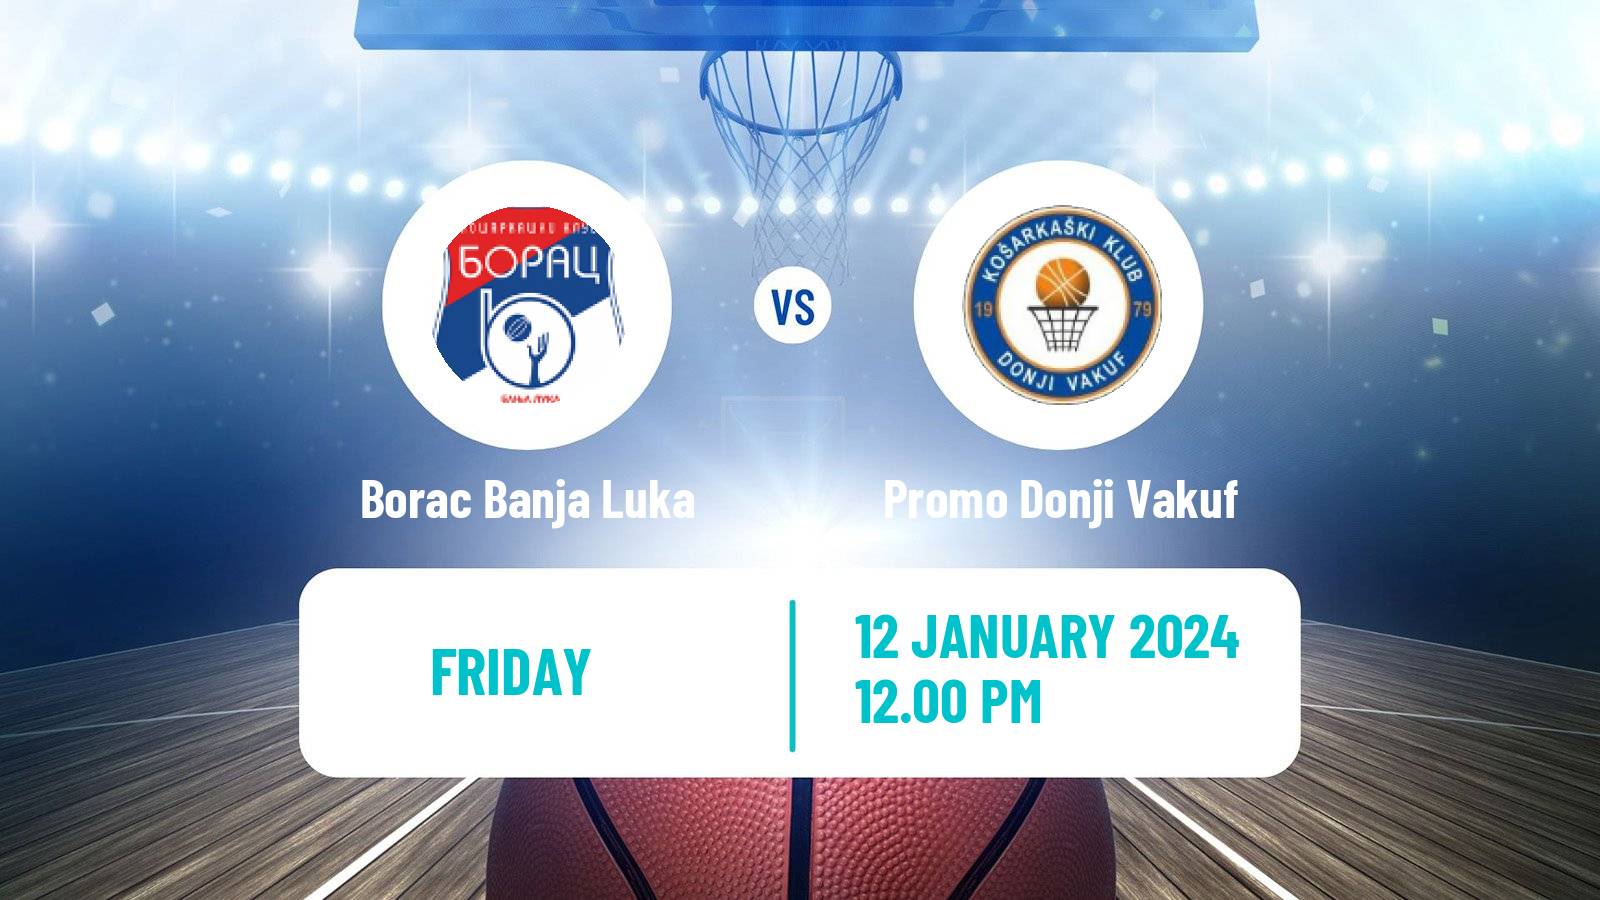 Basketball Bosnian Prvenstvo Basketball Borac Banja Luka - Promo Donji Vakuf